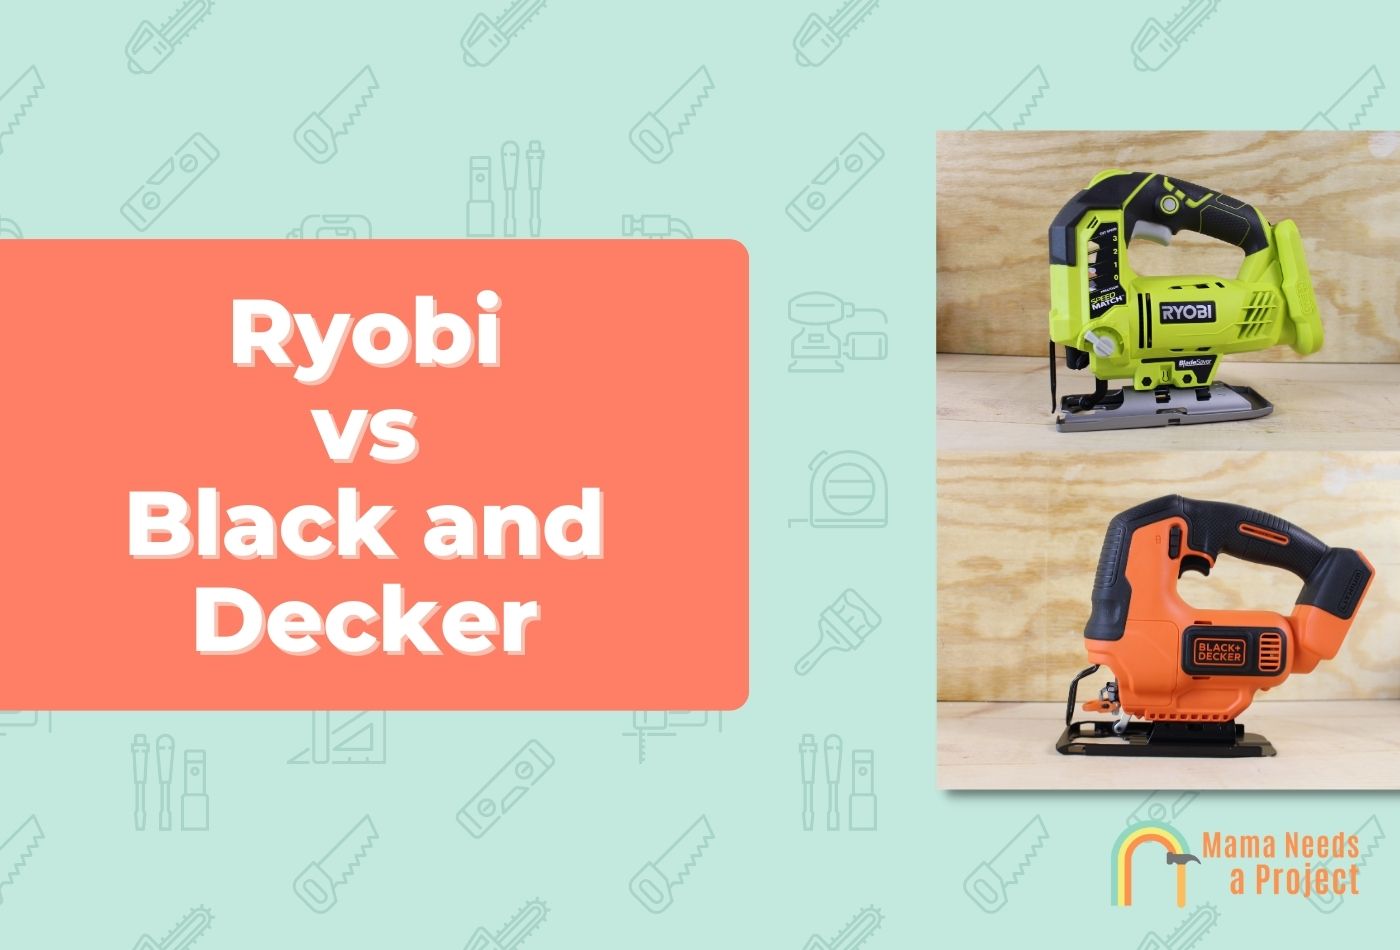 Ryobi vs Black and Decker